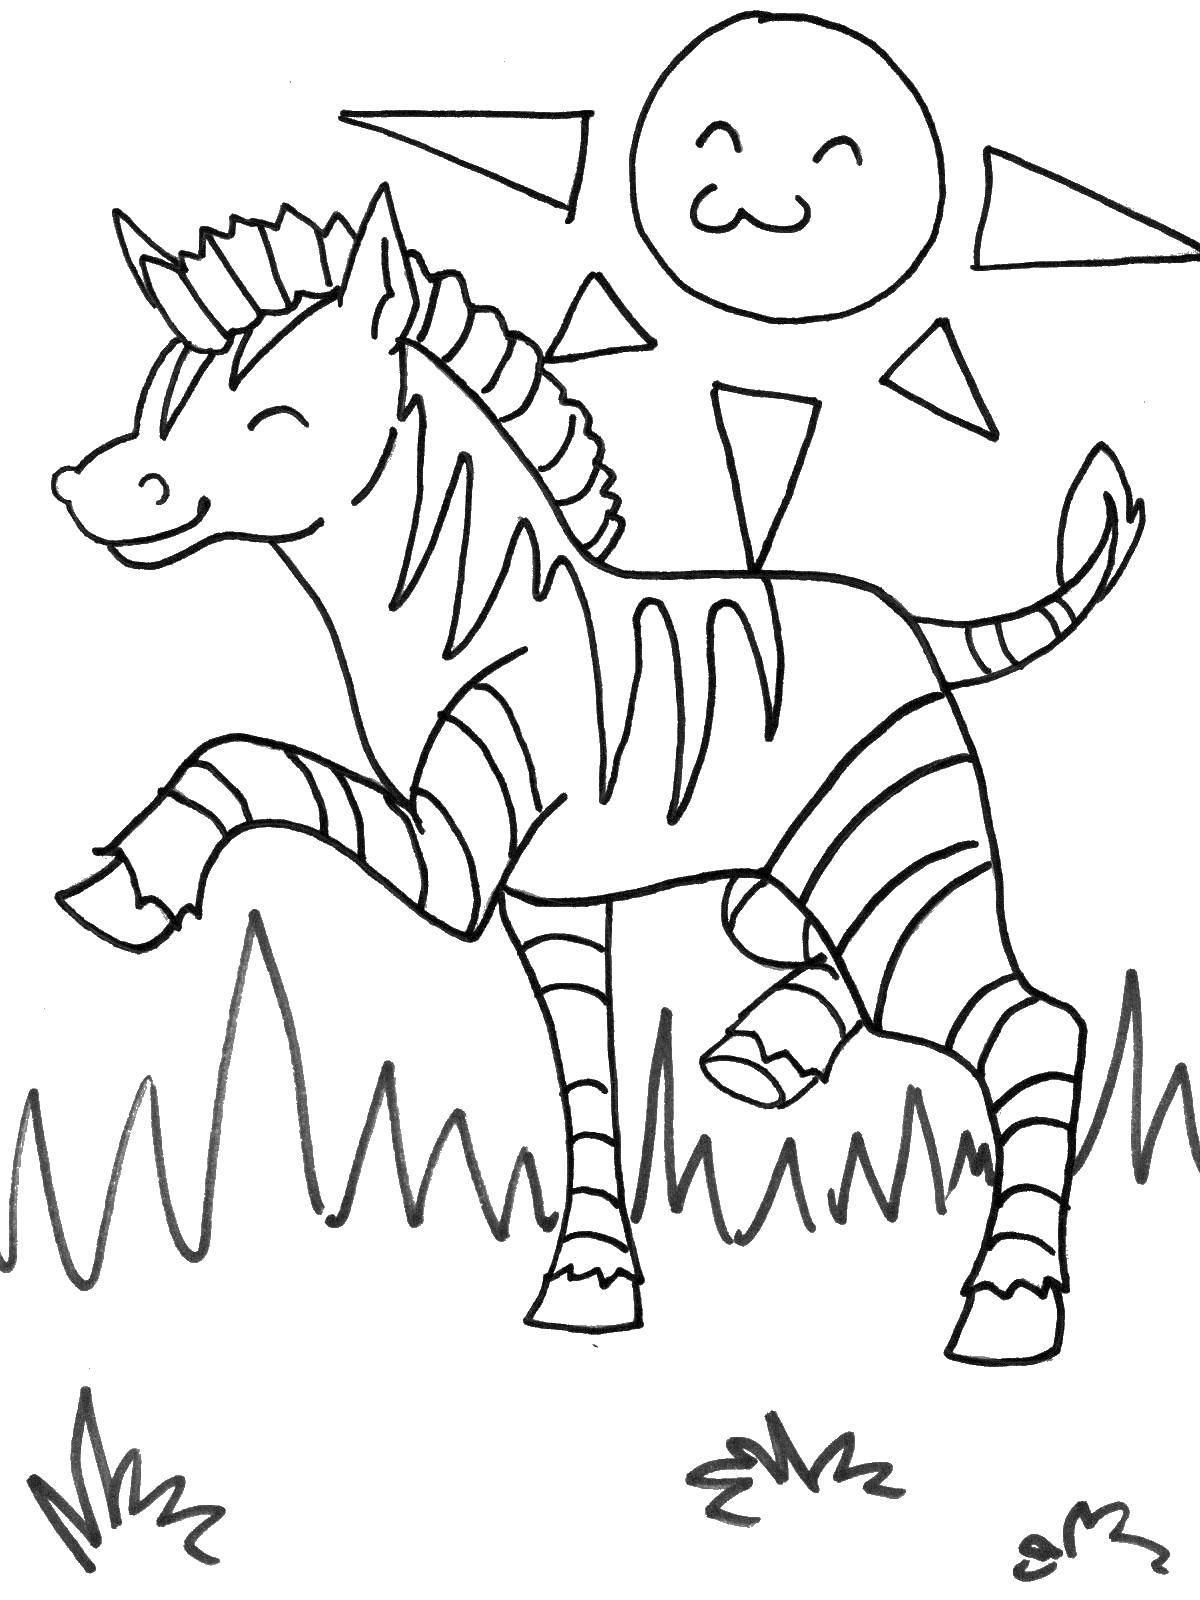 Coloring Zebra. Category Wild animals. Tags:  Zebra .